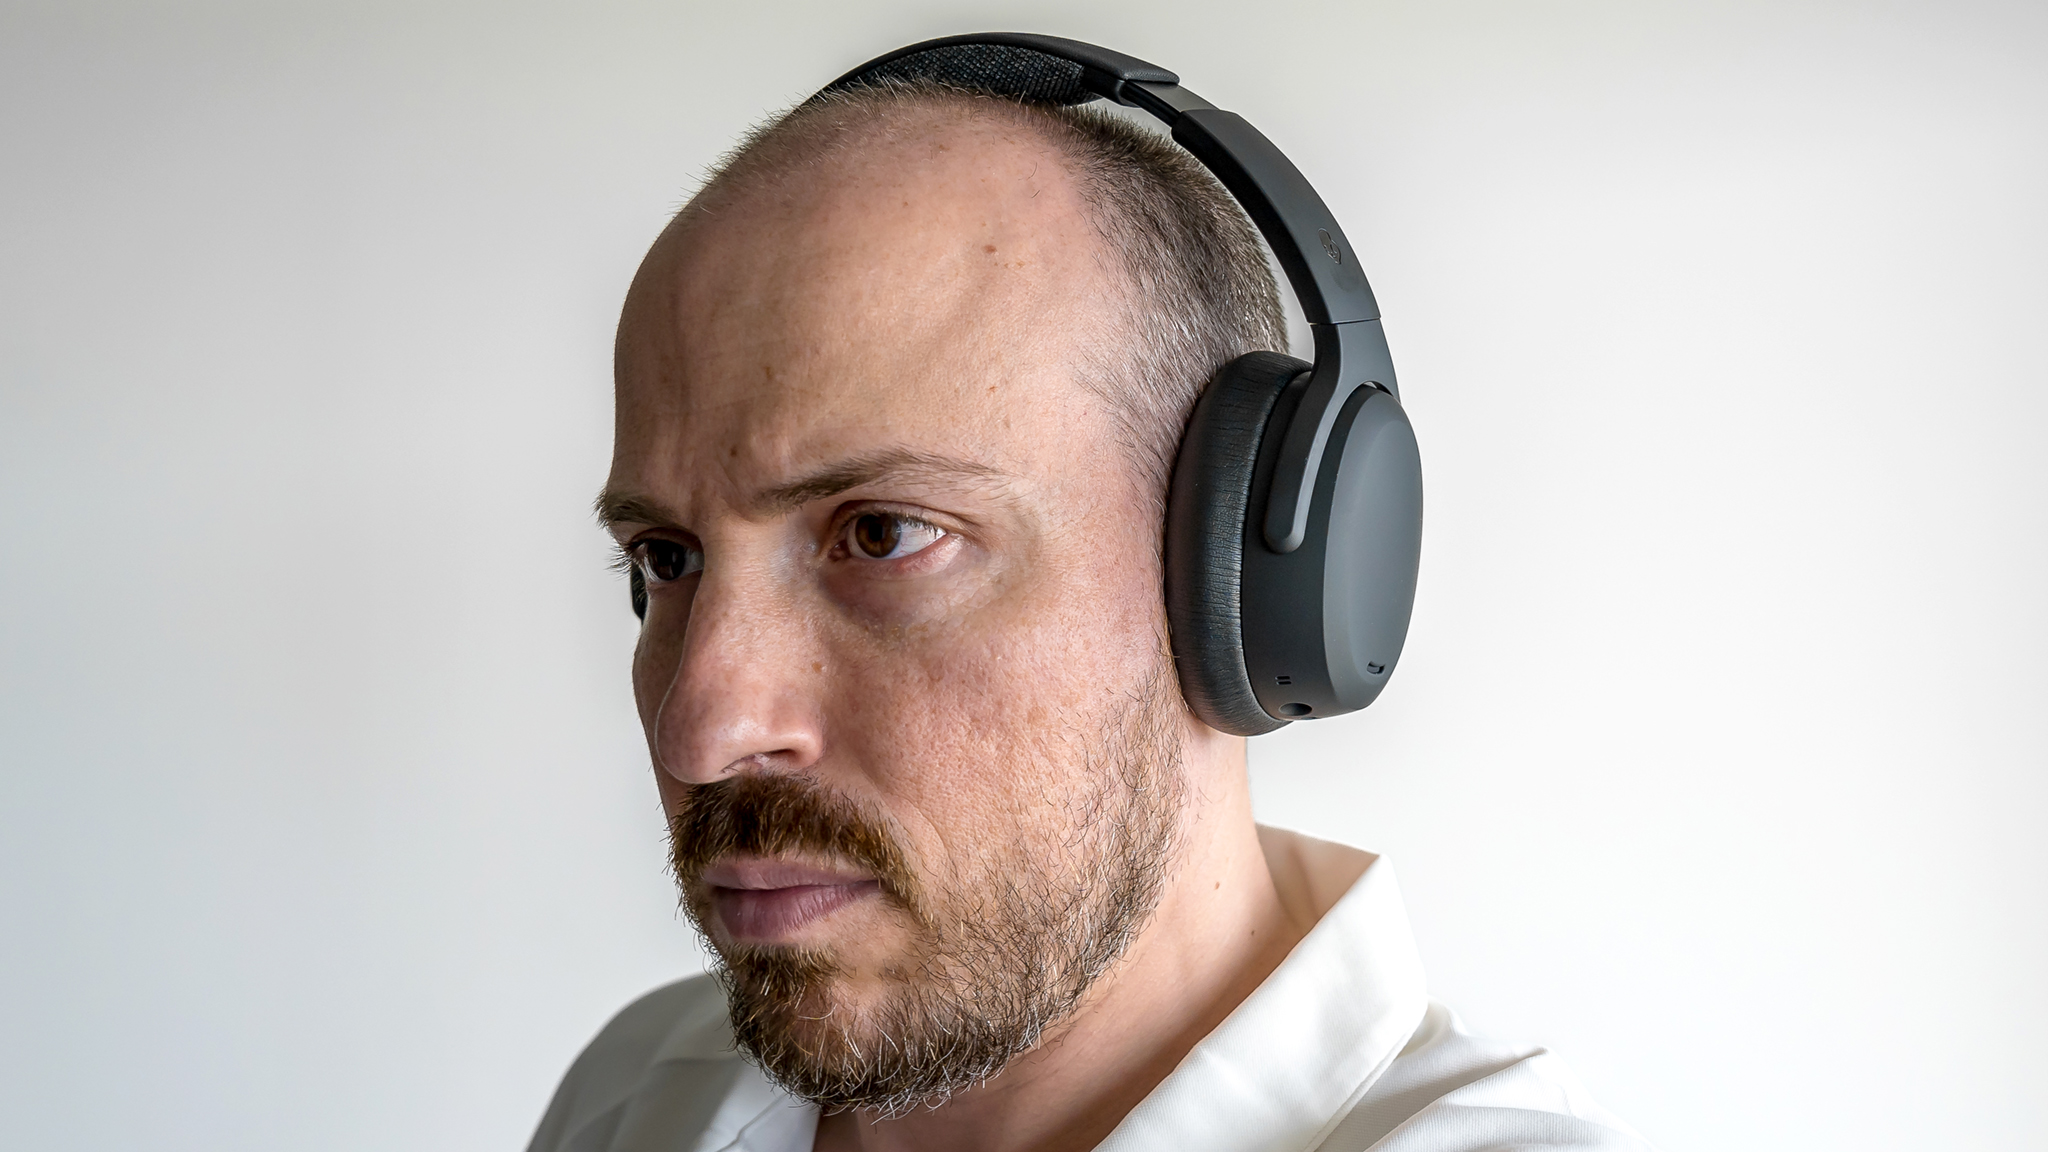 Wearing the Skullcandy Crusher ANC 2 over-ear headphones.